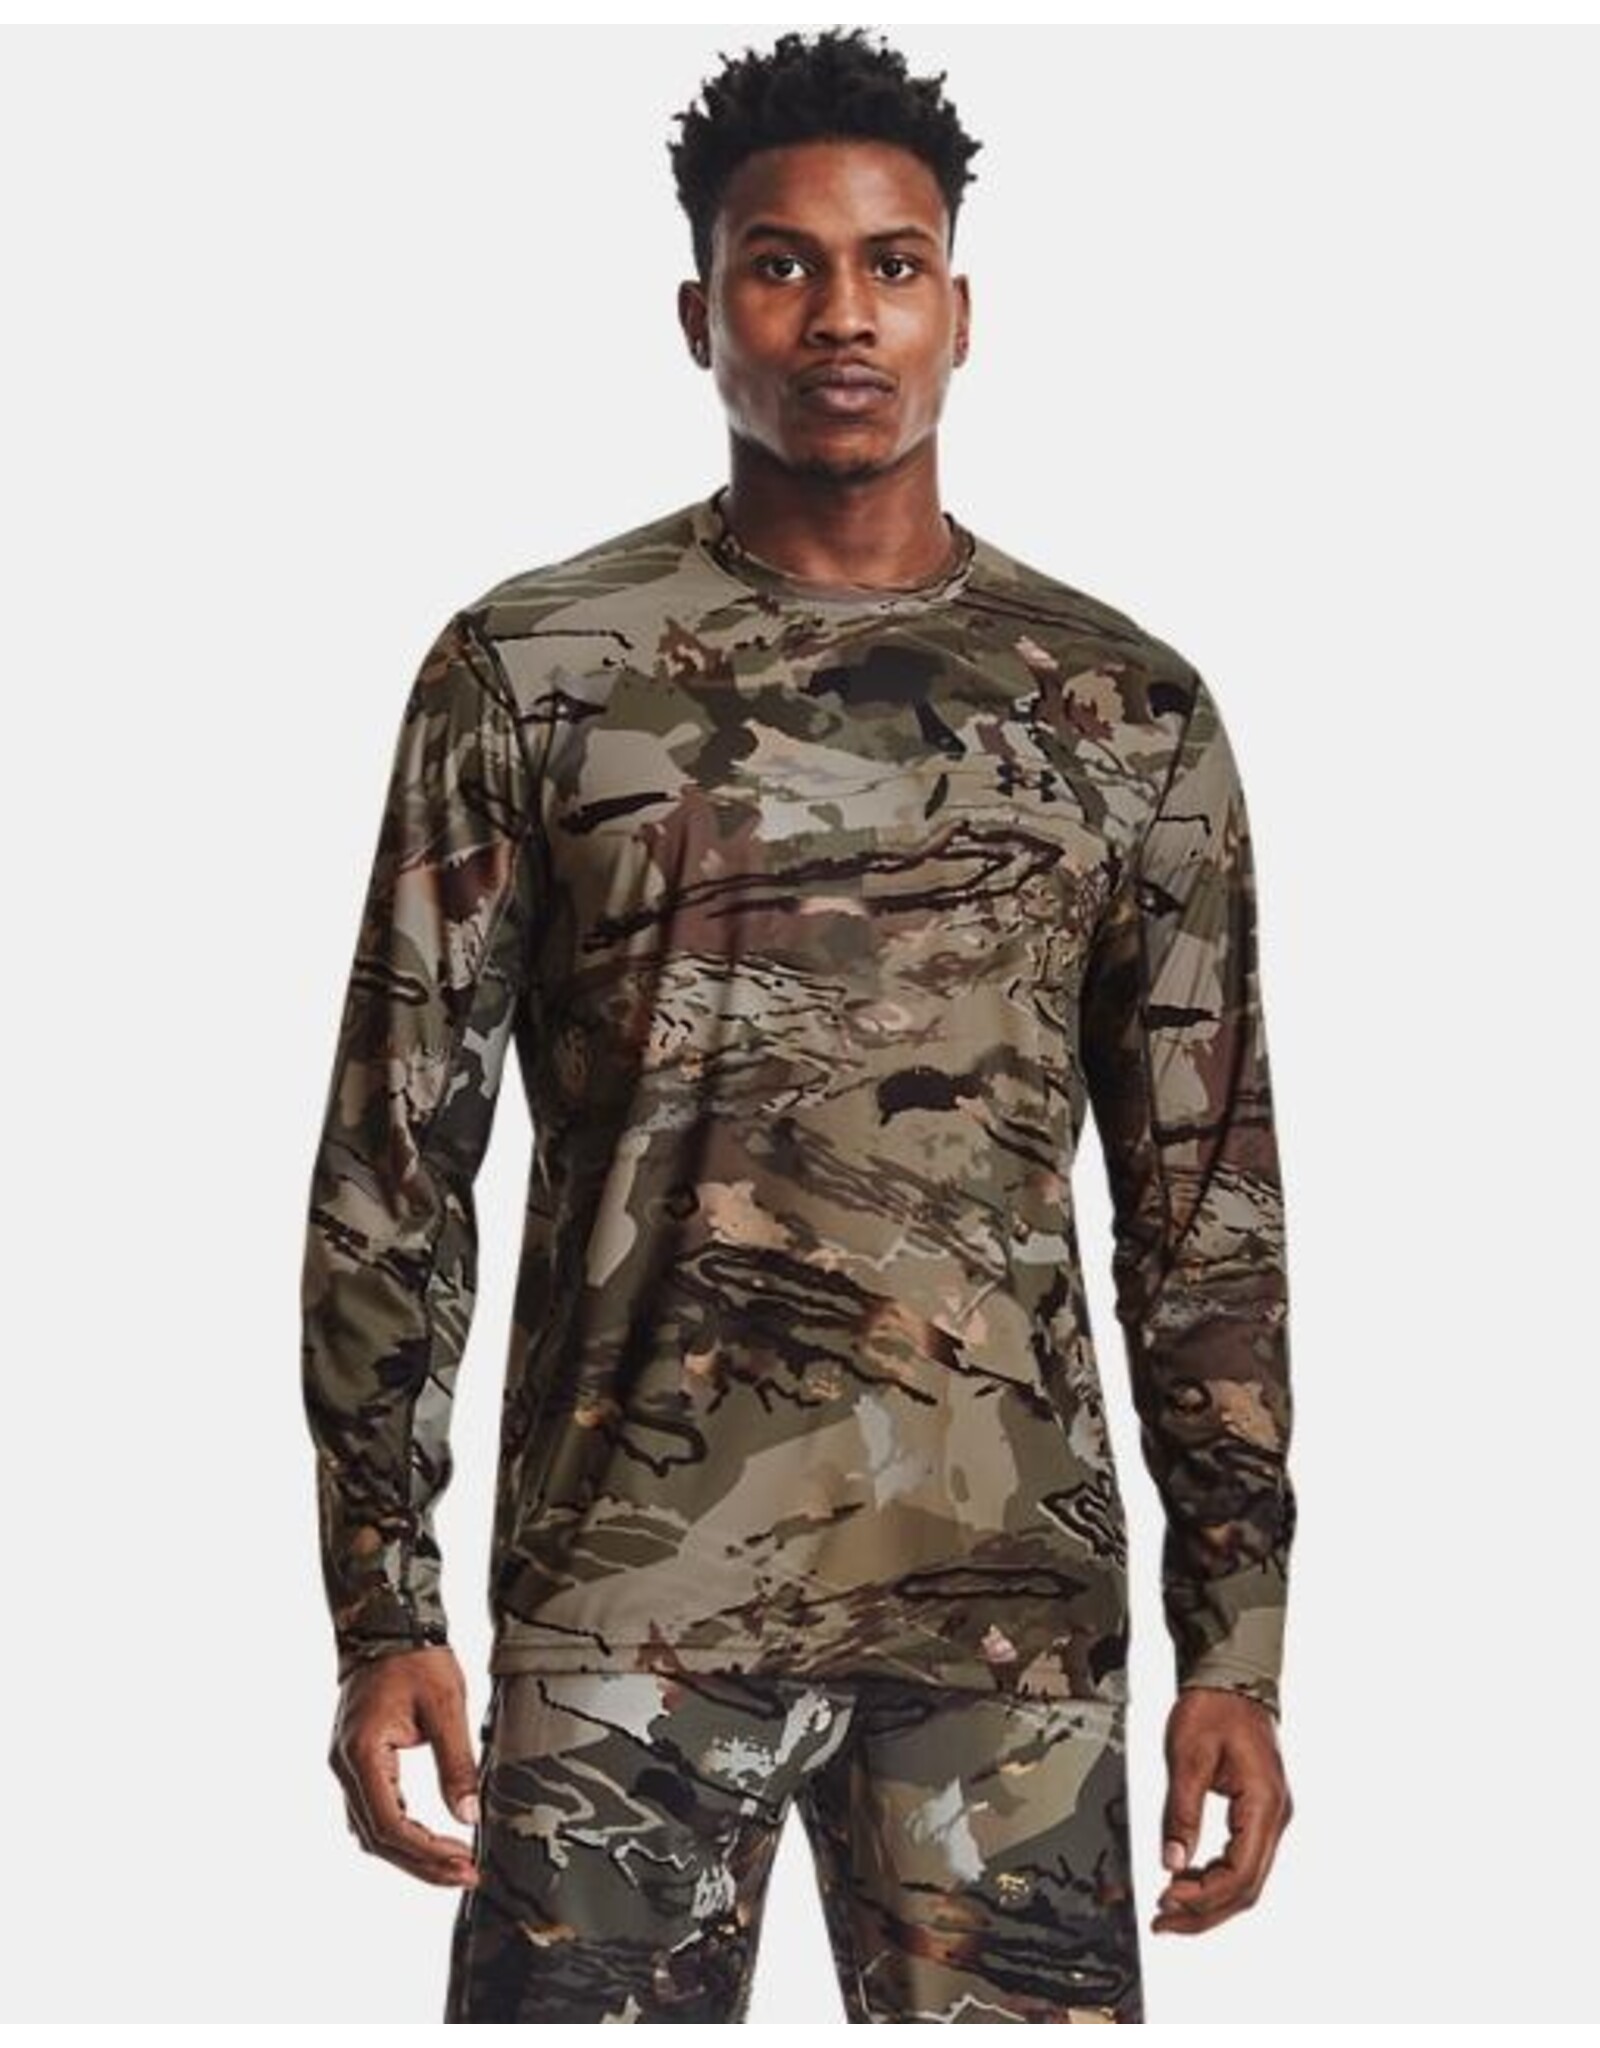 Under Armour Men's UA Tac Combat Shirt 2.0 Long Sleeve Polyester Black